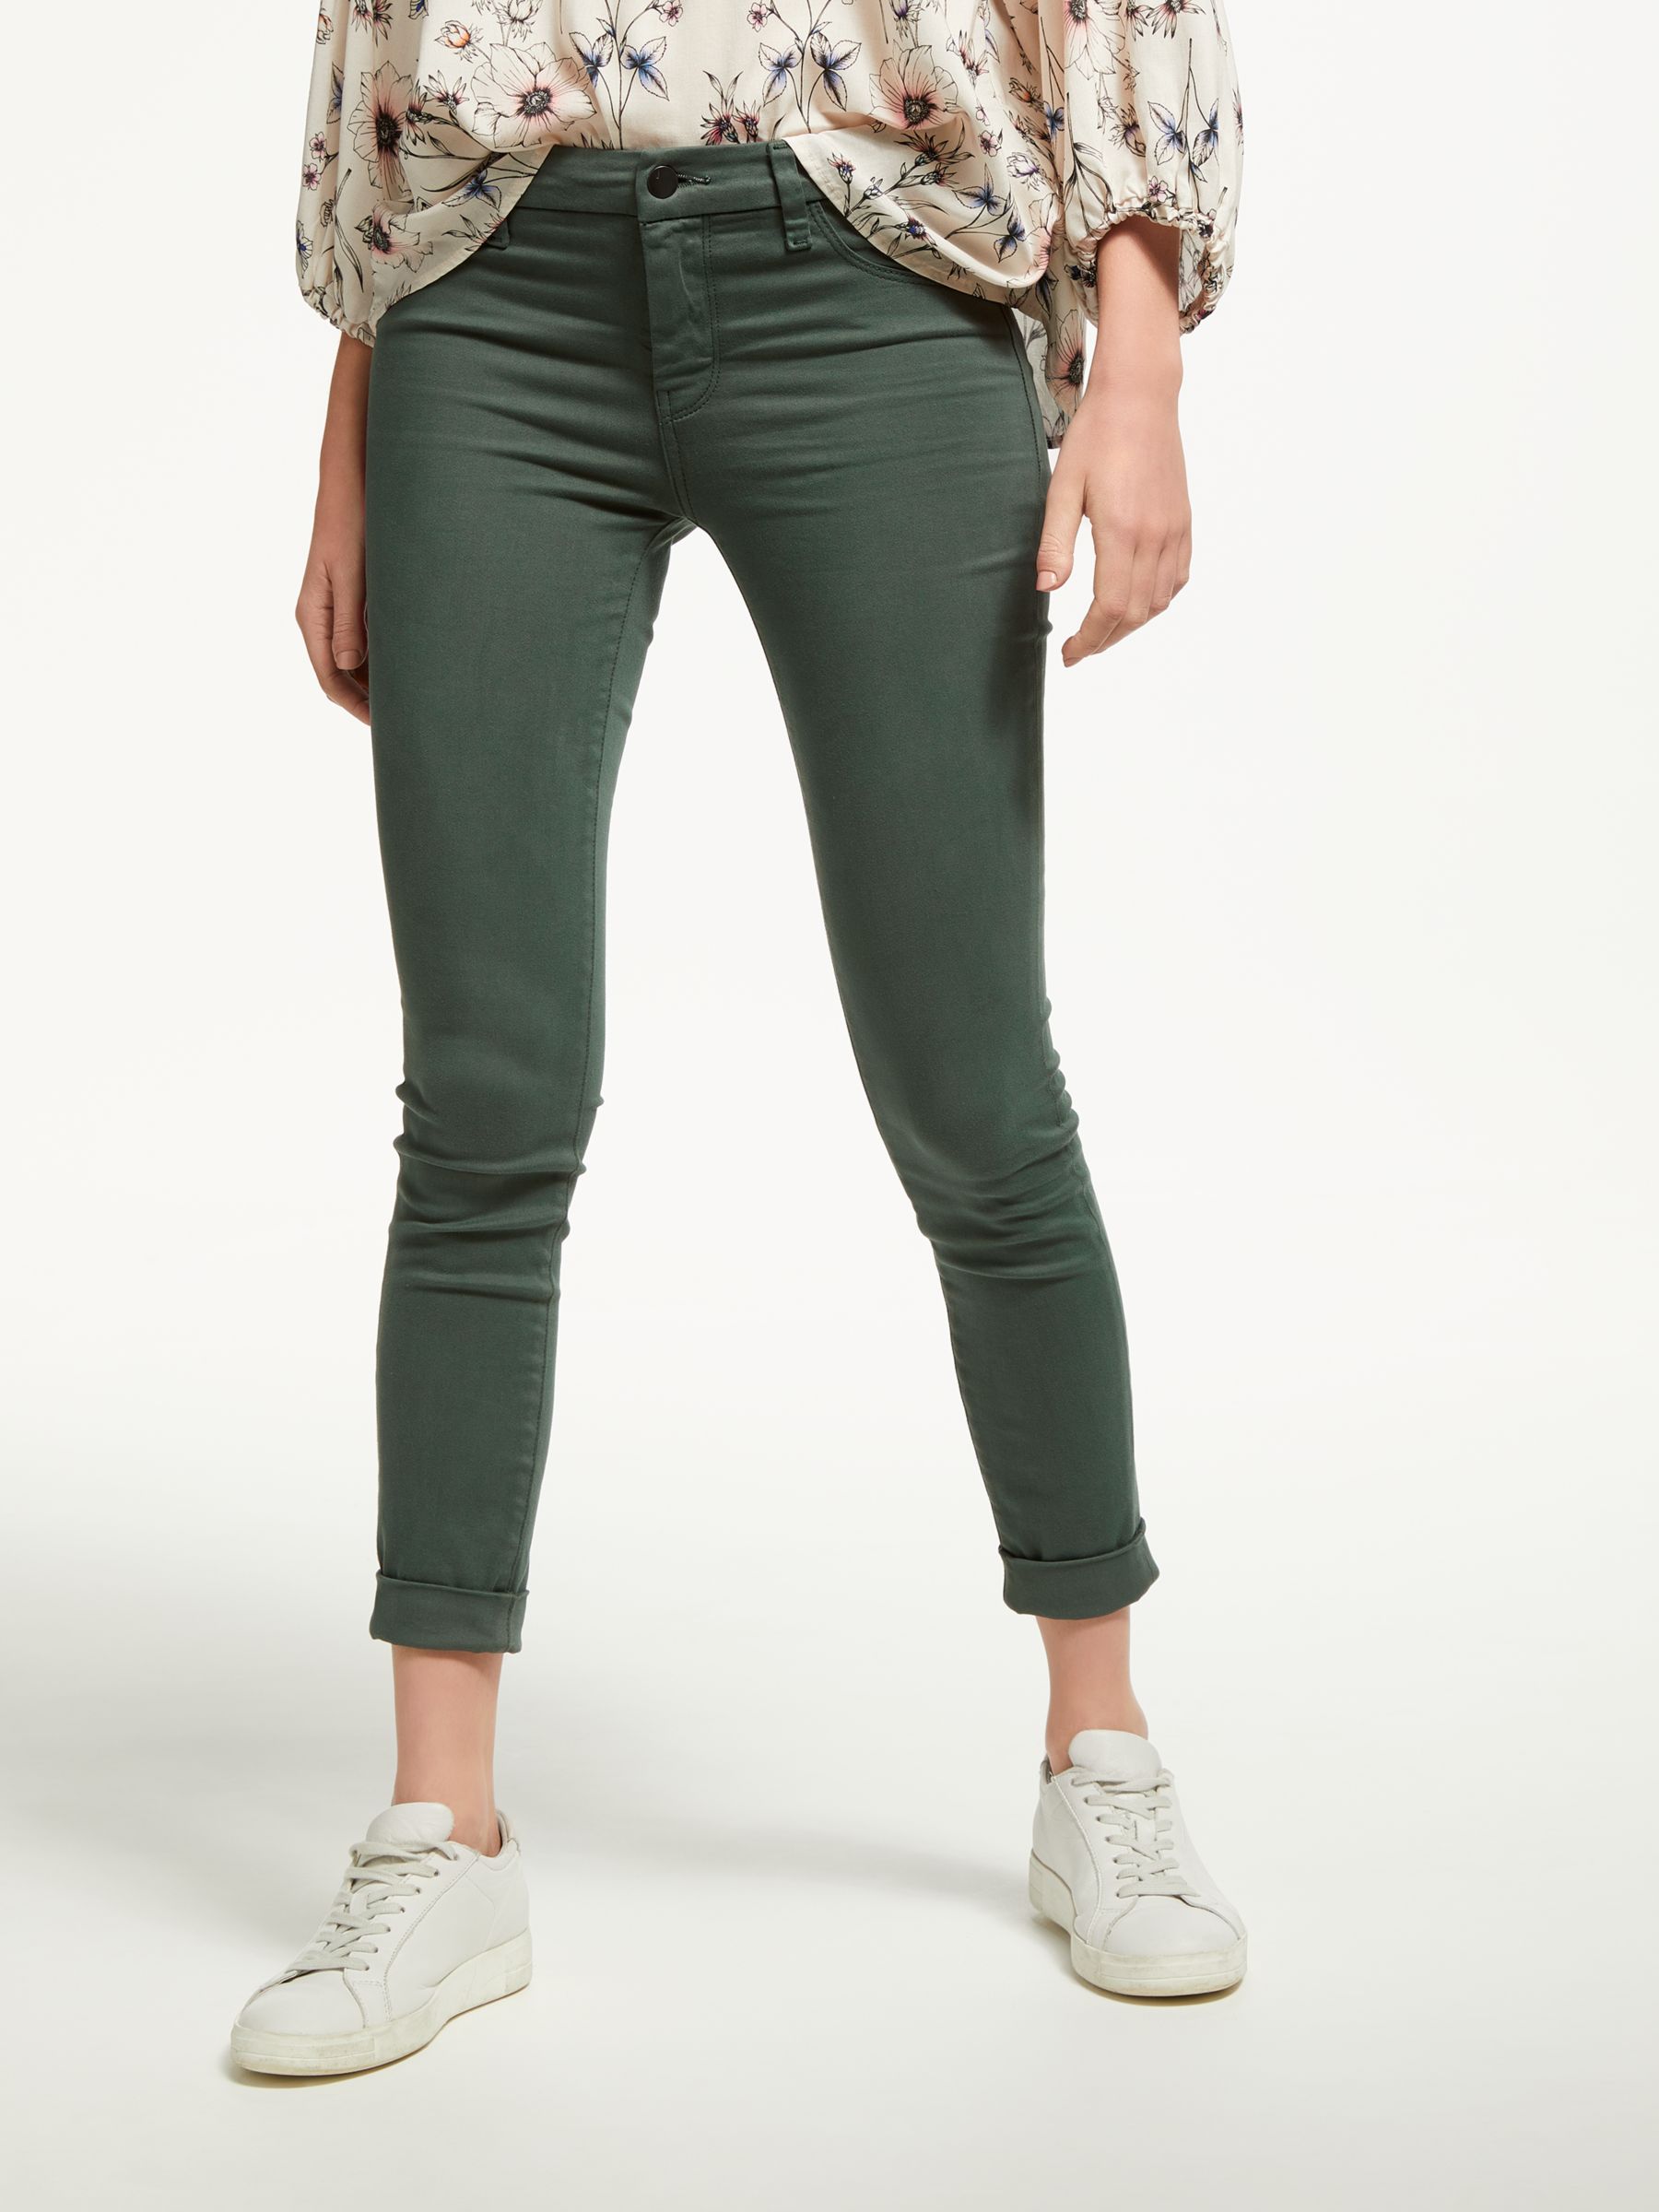 j brand green jeans